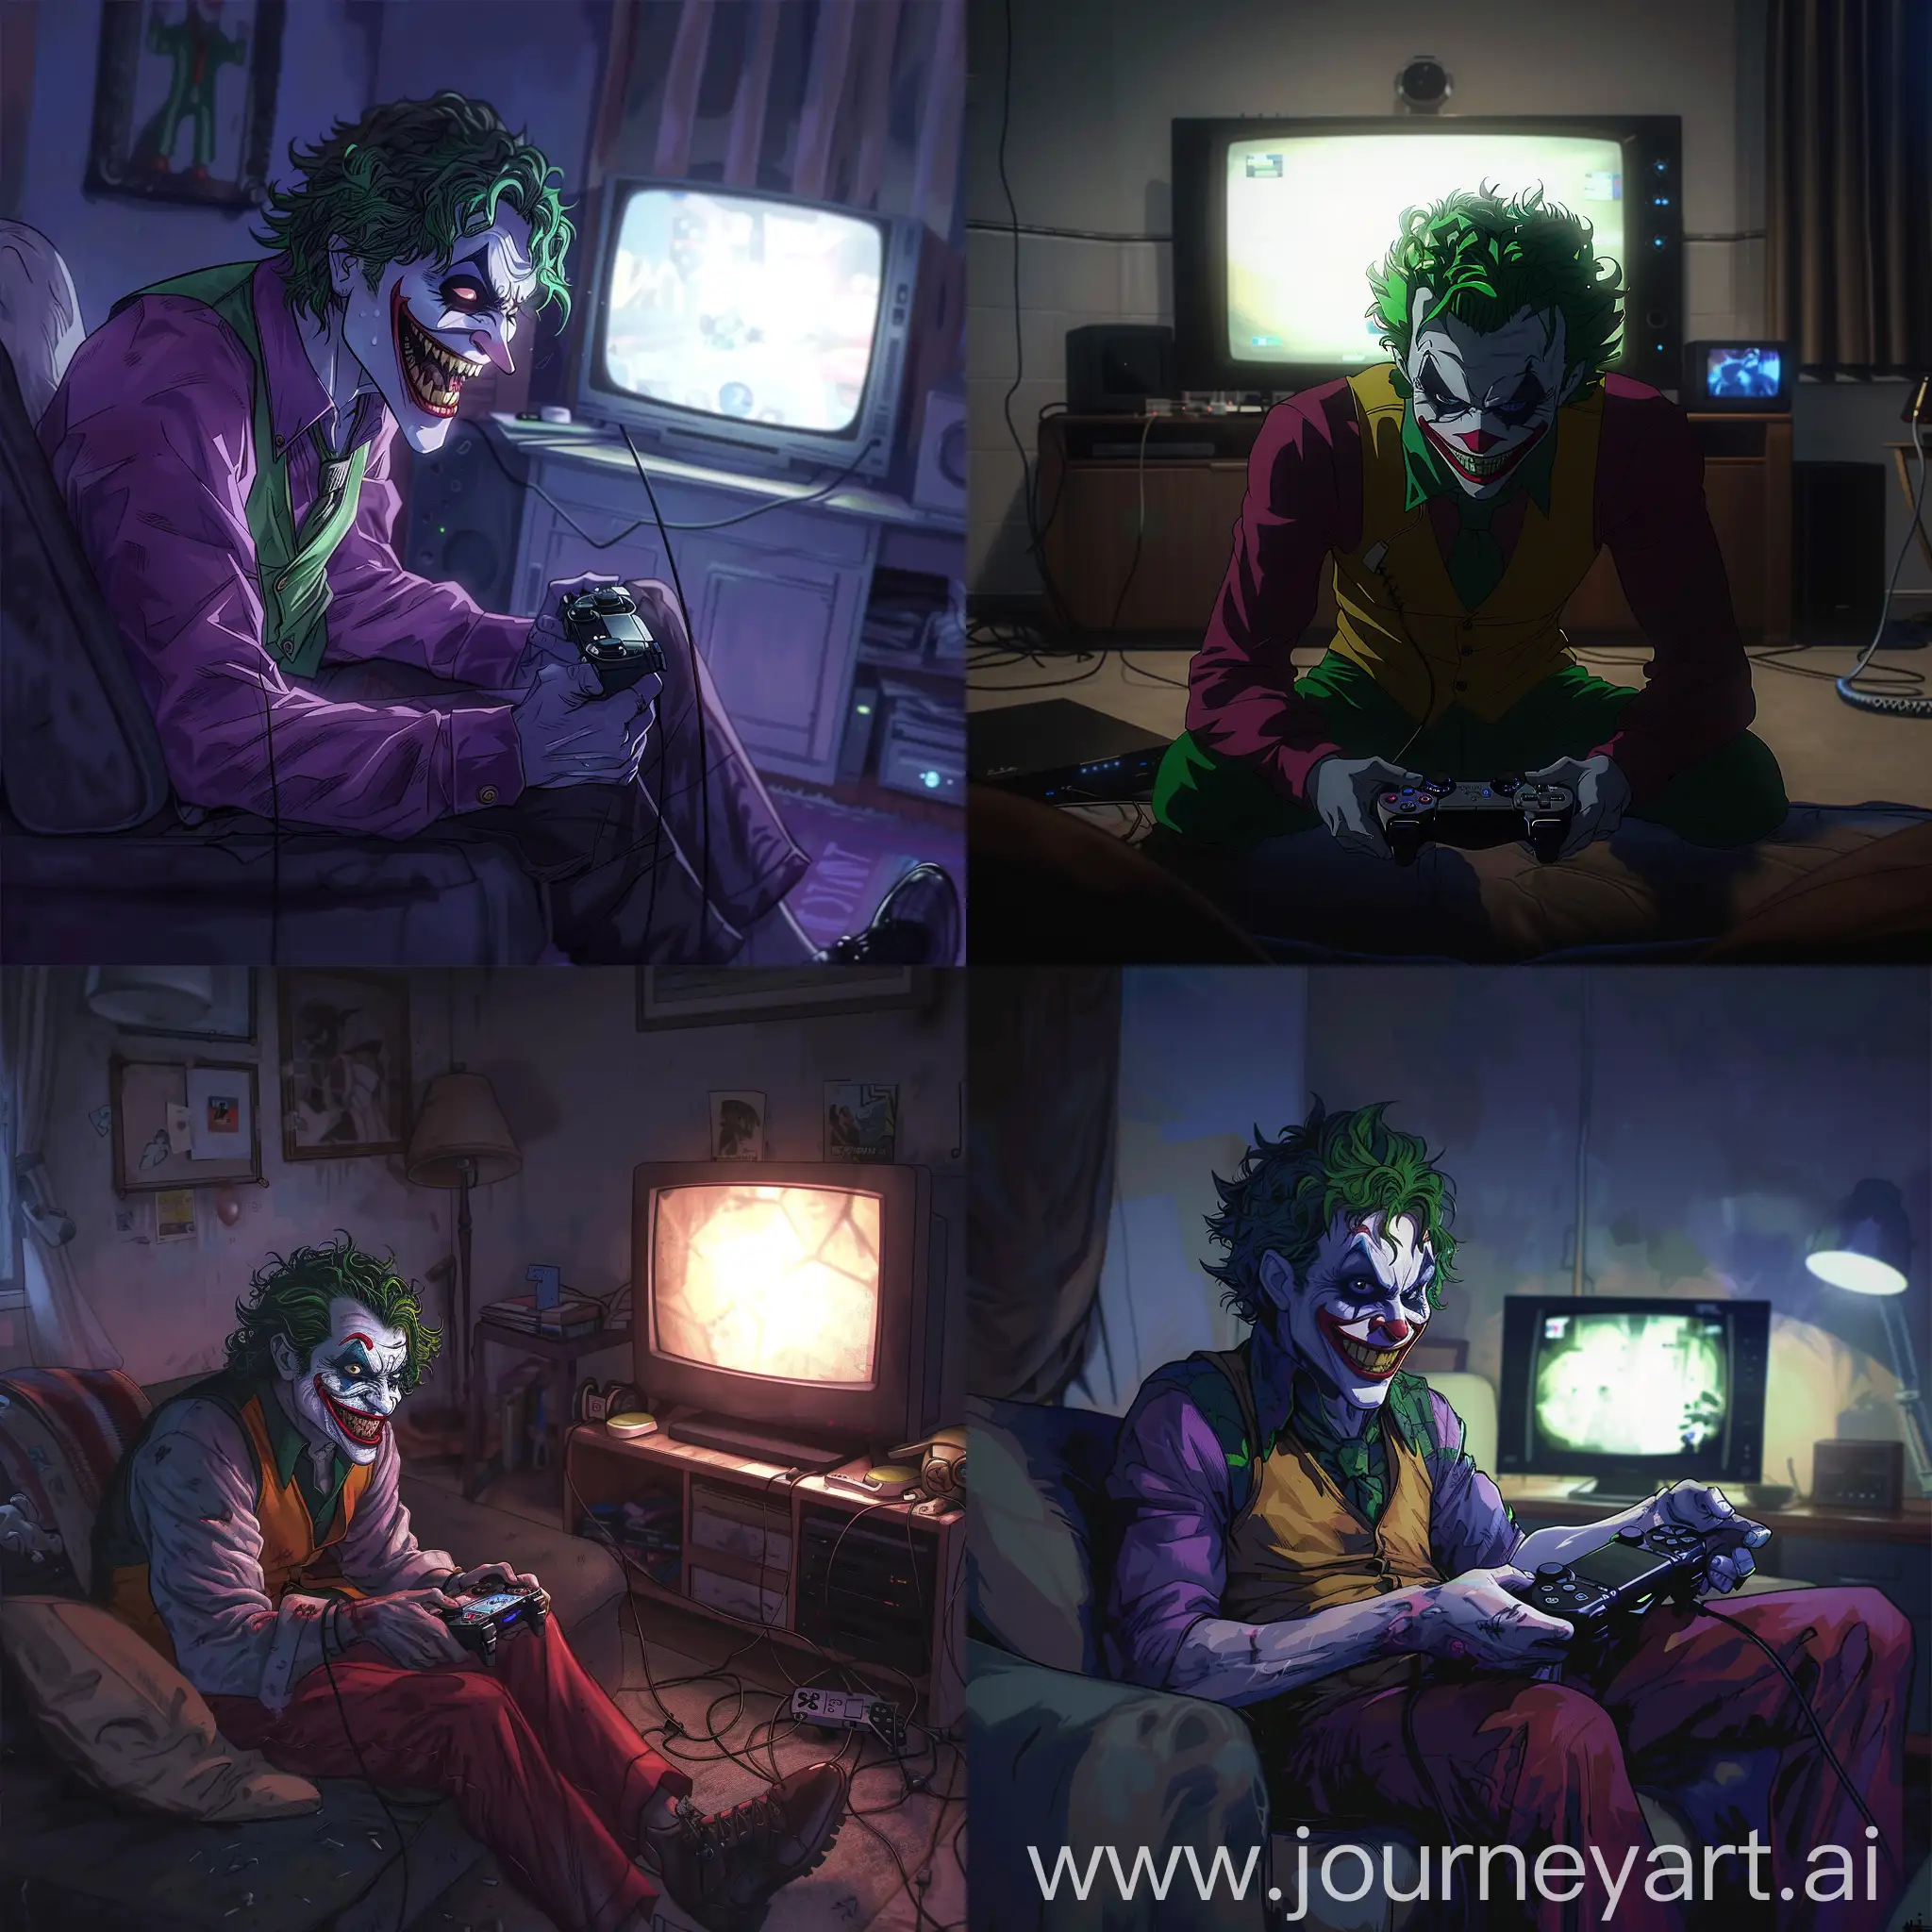 Anime-Joker-Playing-Videogames-in-Dimly-Lit-Room